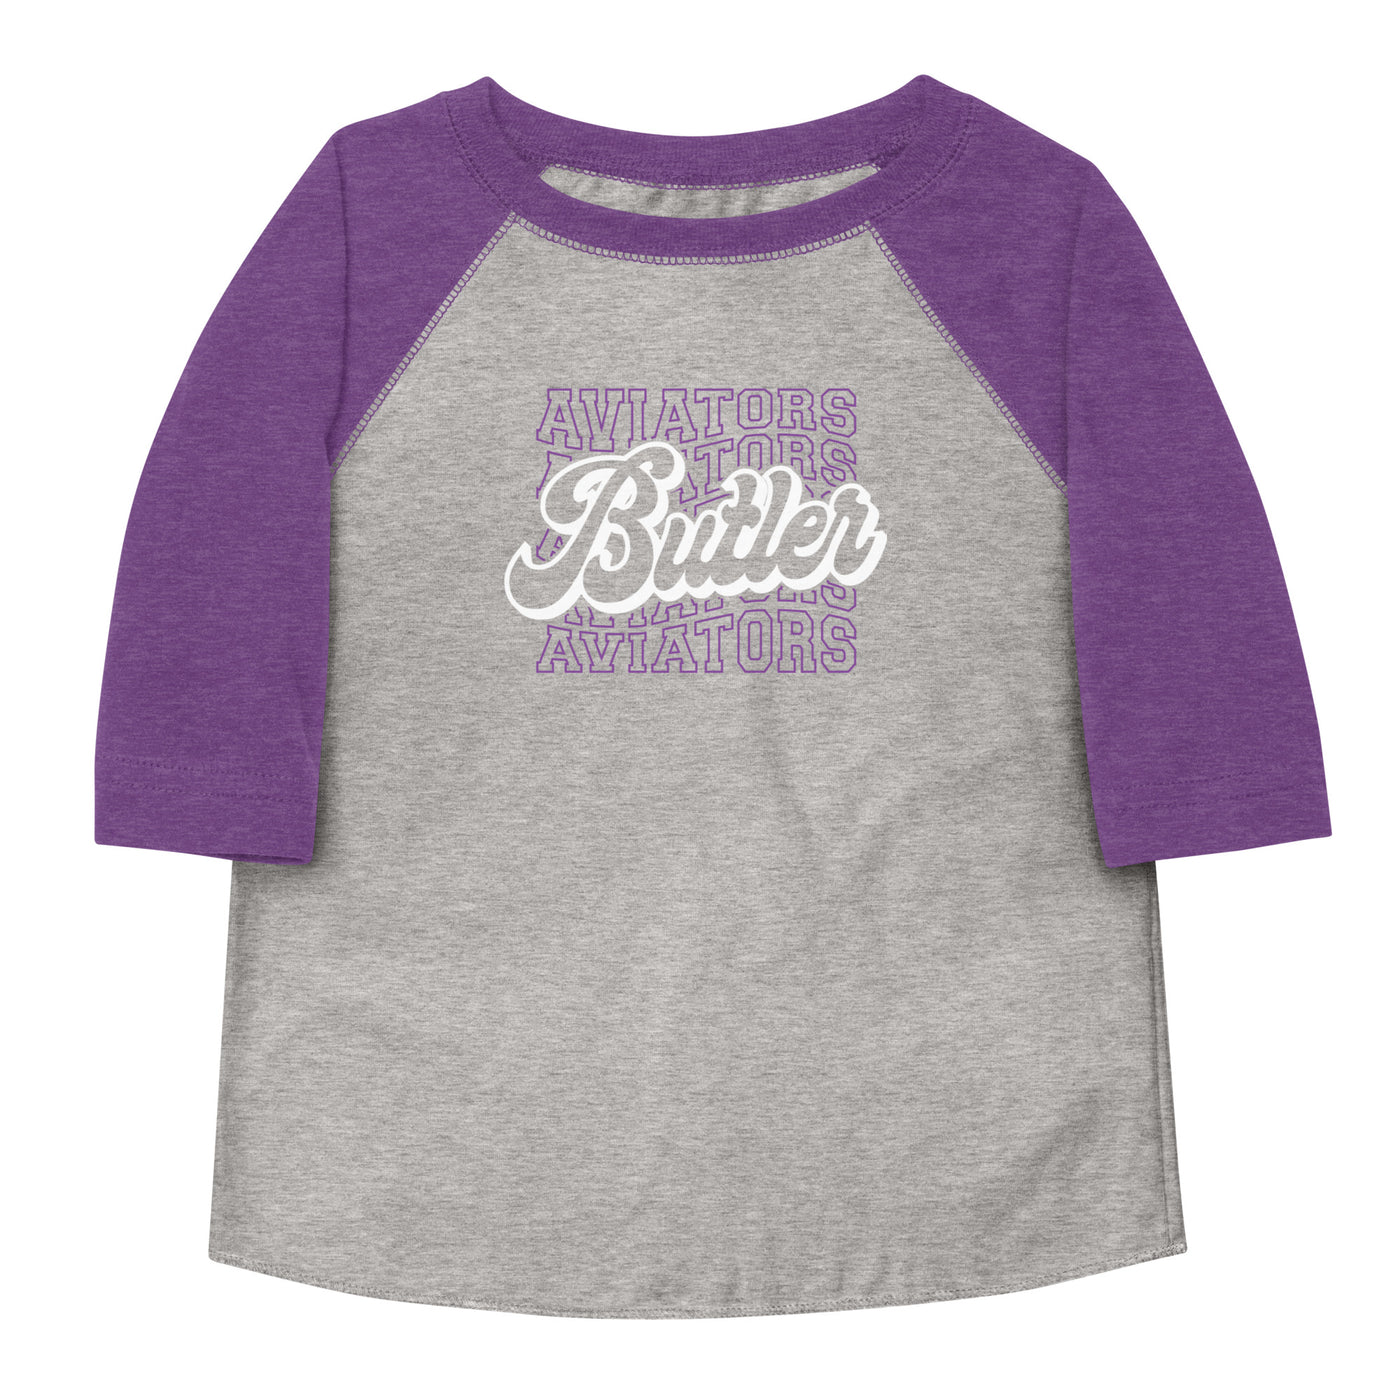 Butler Toddler baseball shirt